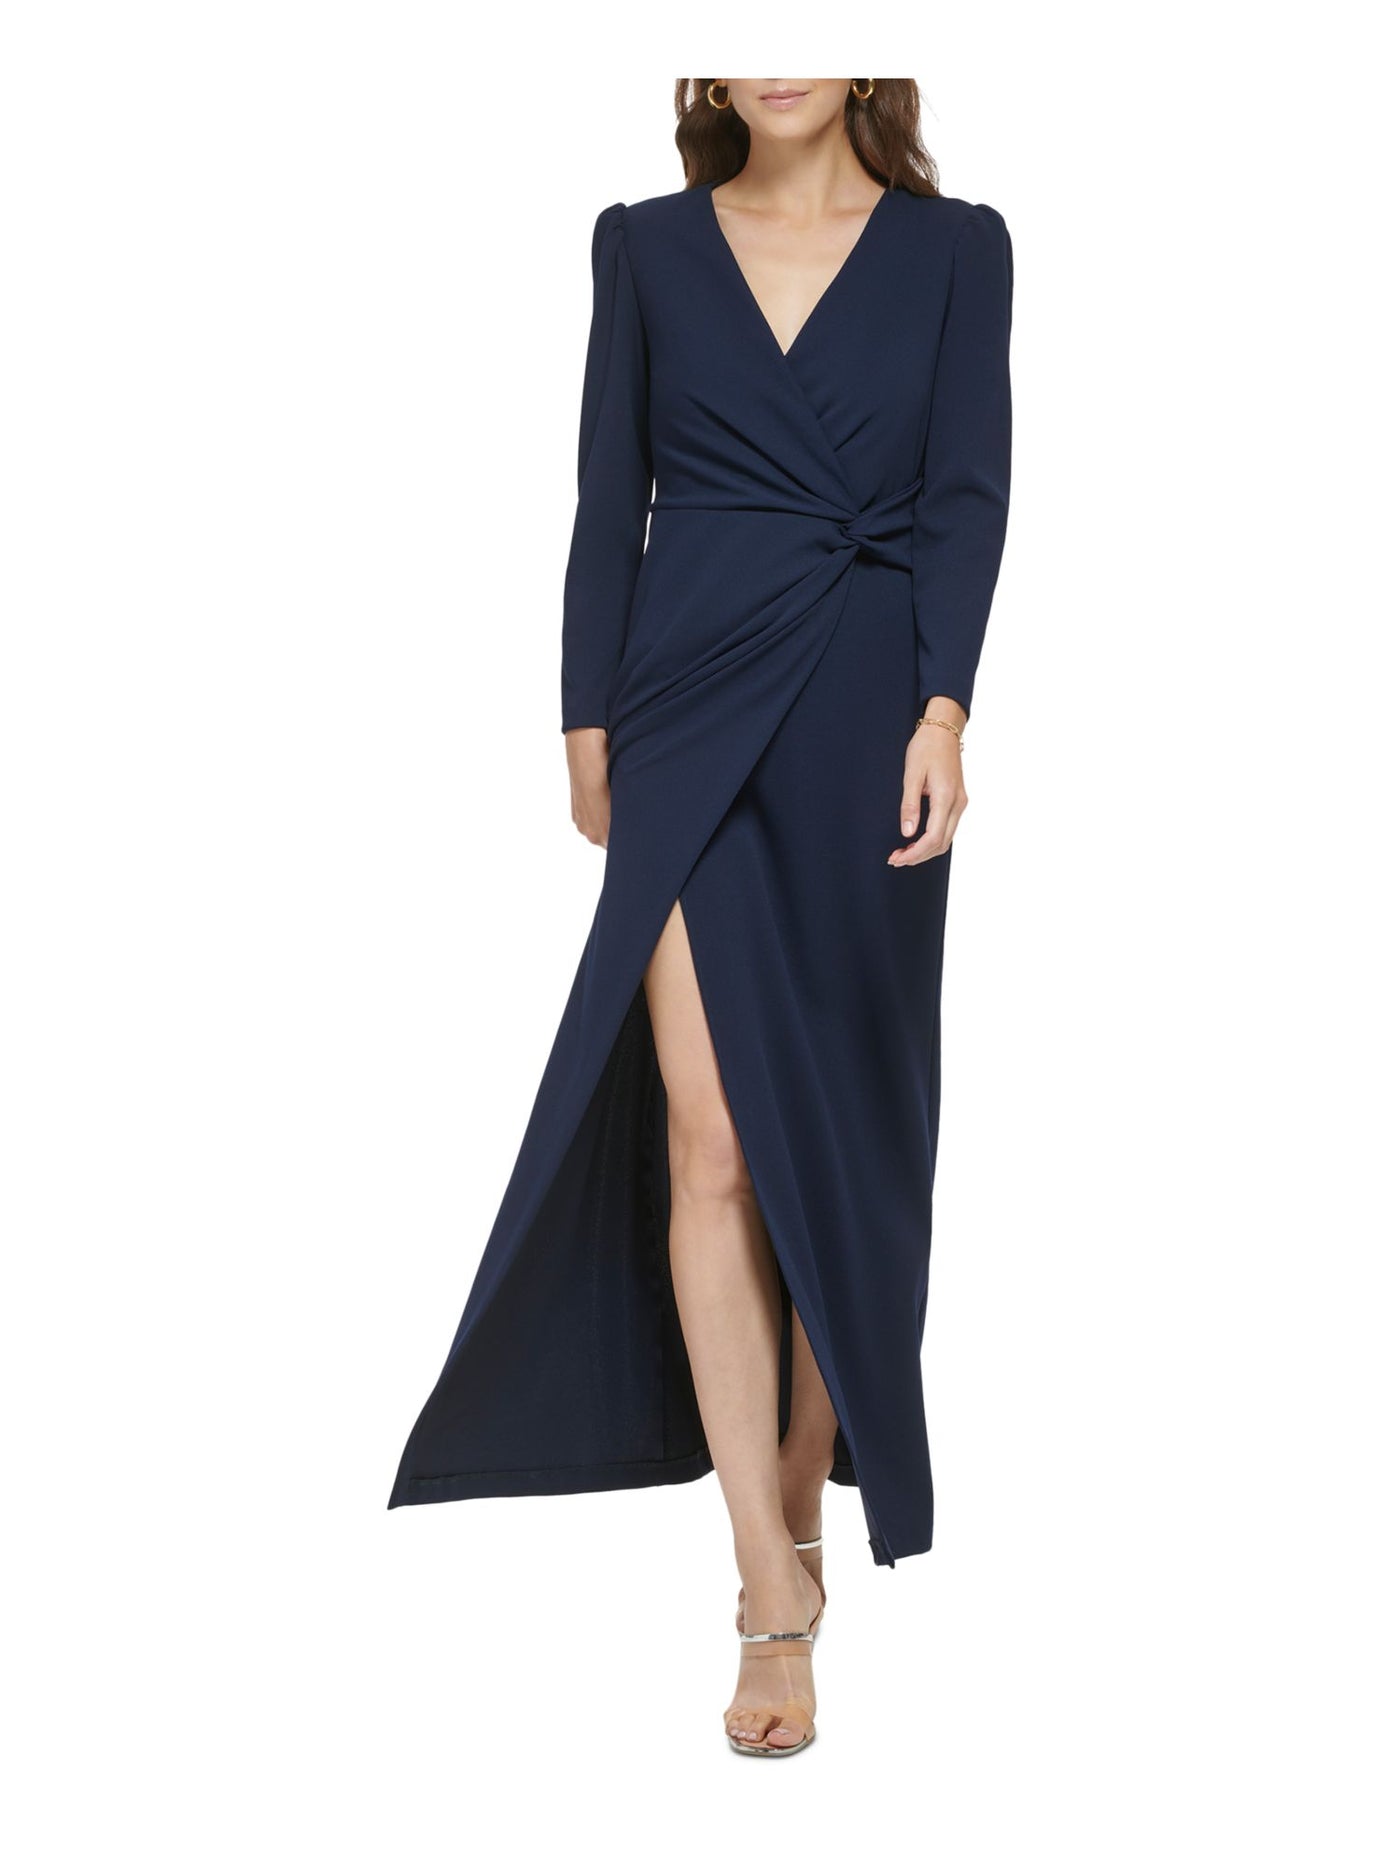 DKNY Womens Navy Twist Front Zippered Long Sleeve Surplice Neckline Maxi Evening Faux Wrap Dress 8